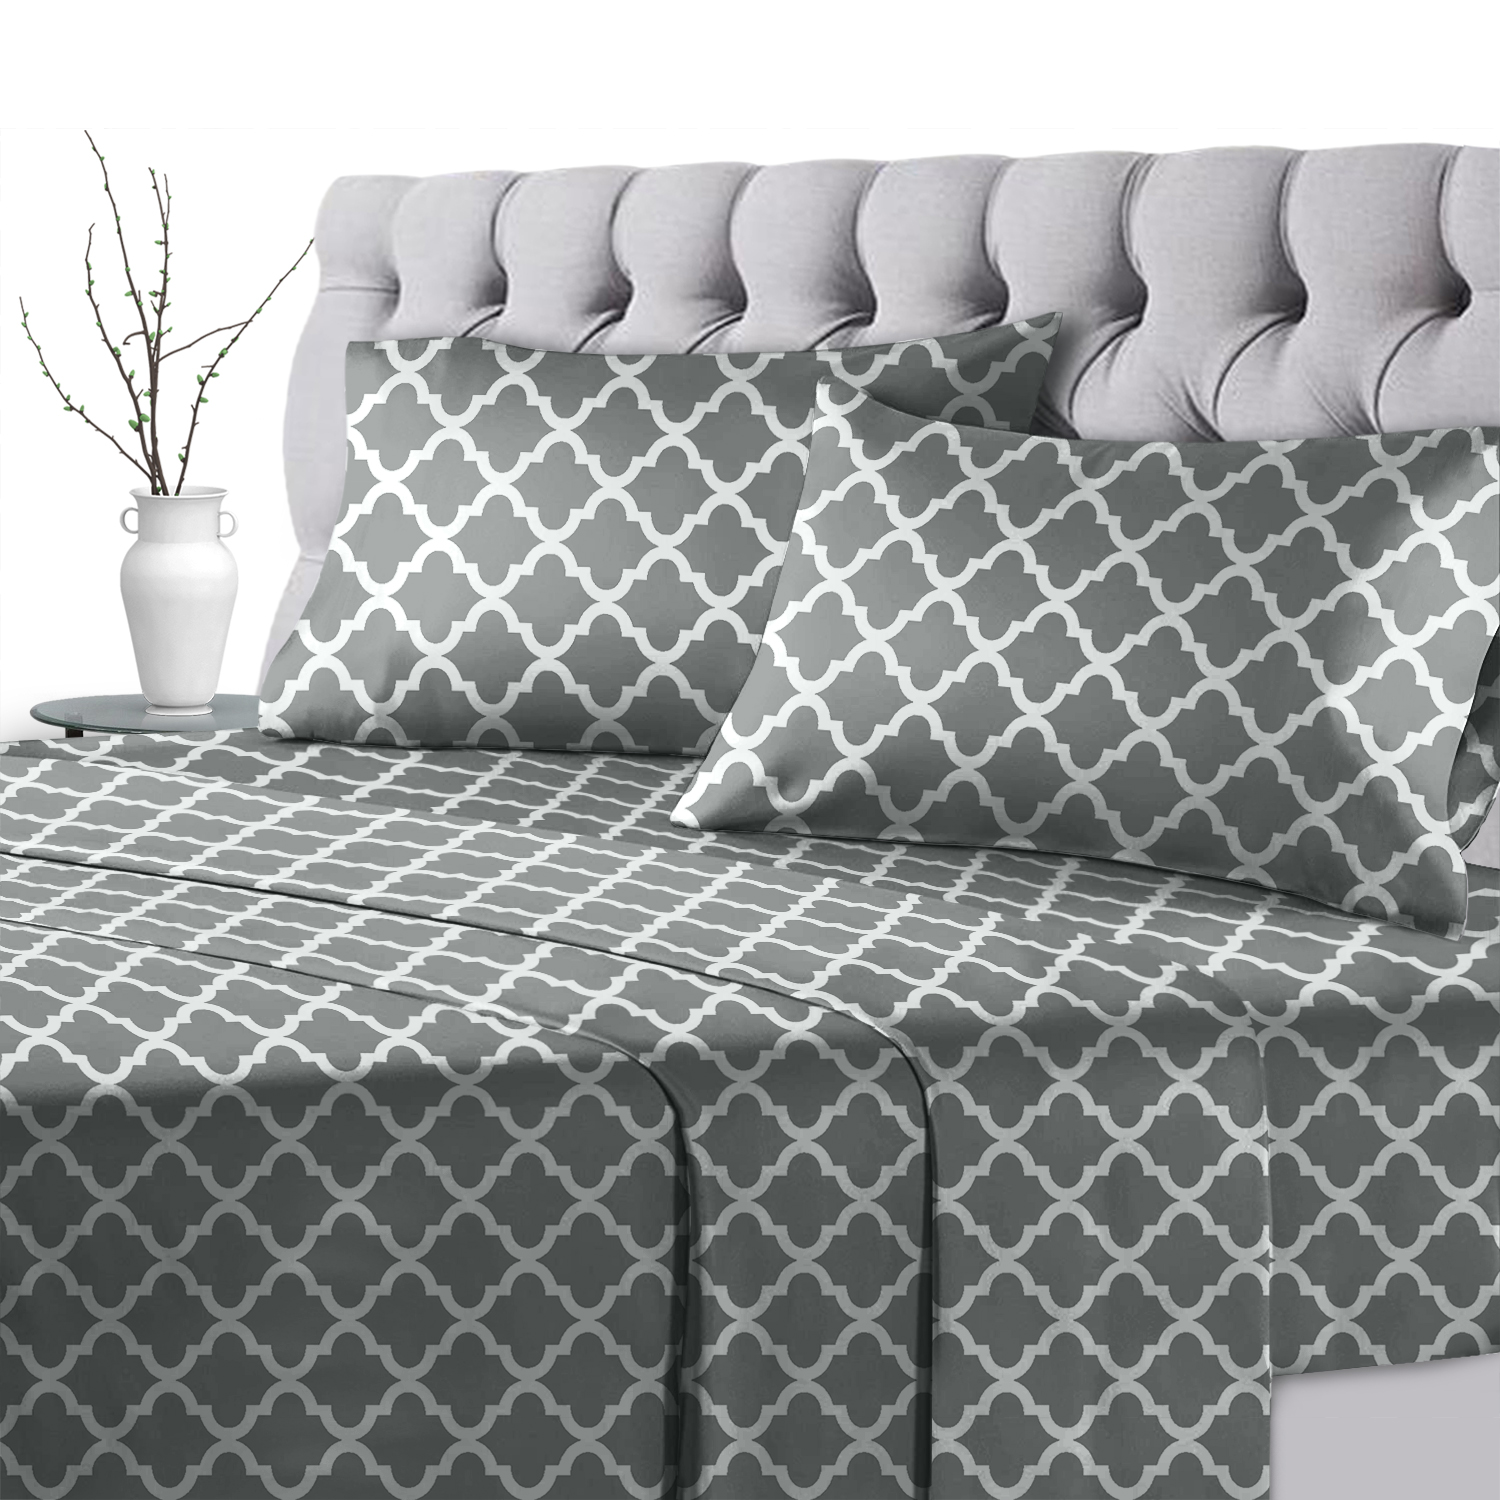 Quatrefoil Bed Sheets Set, Twin Bed Flat Sheet Dimensions